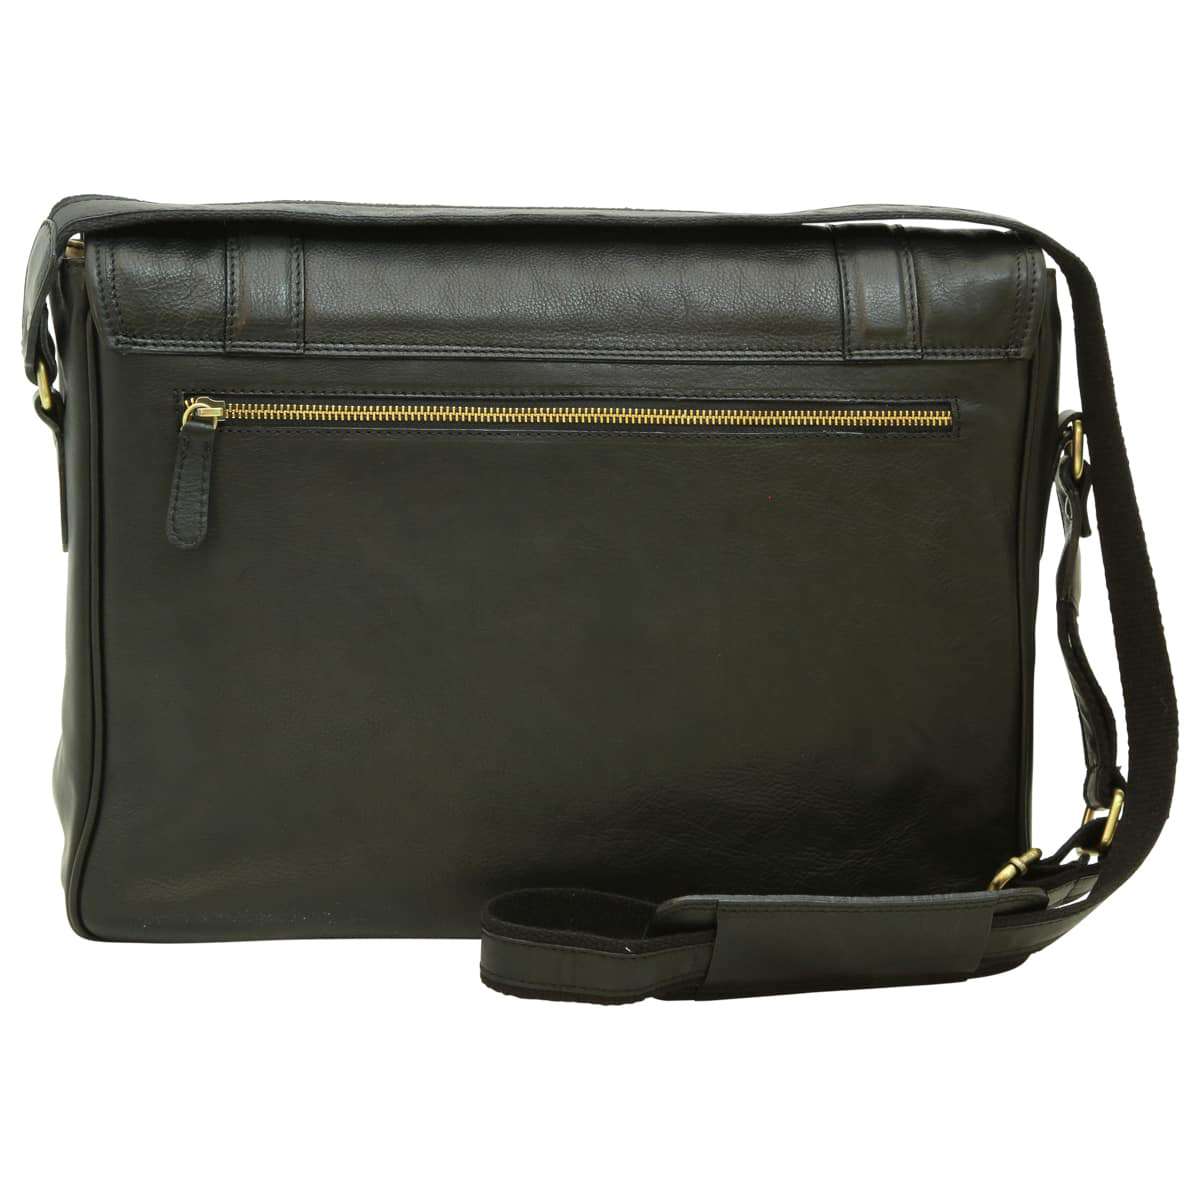 Soft Calfskin Leather Messenger Bag - Black | 030491NE | EURO | Old Angler Firenze